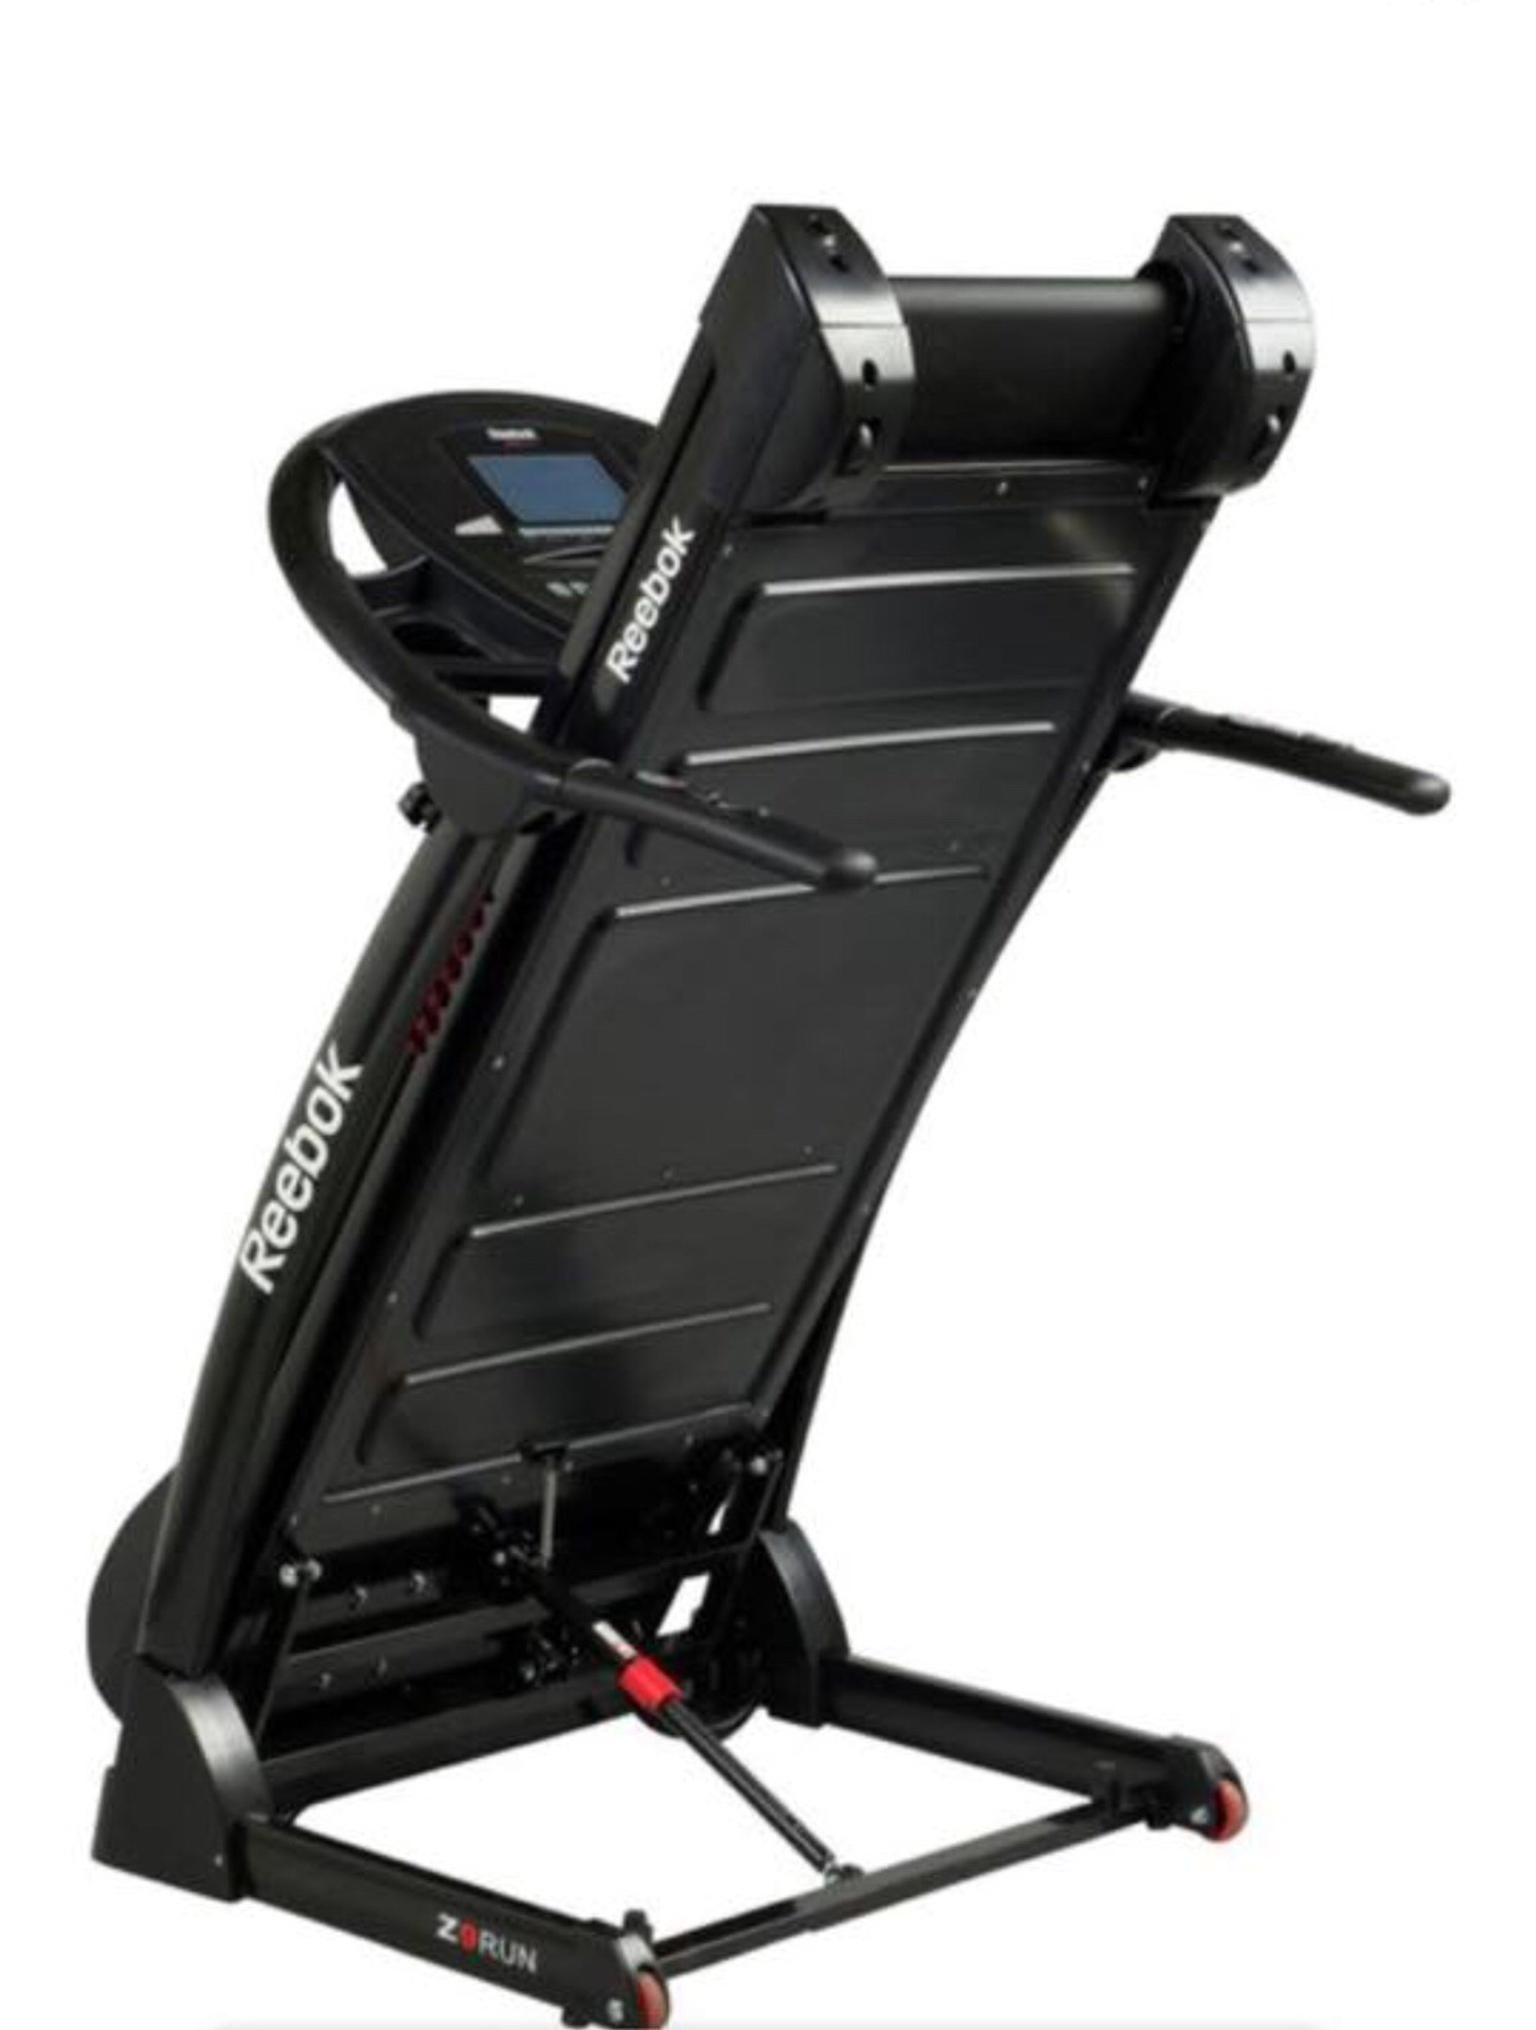 reebok zr9 treadmill for sale